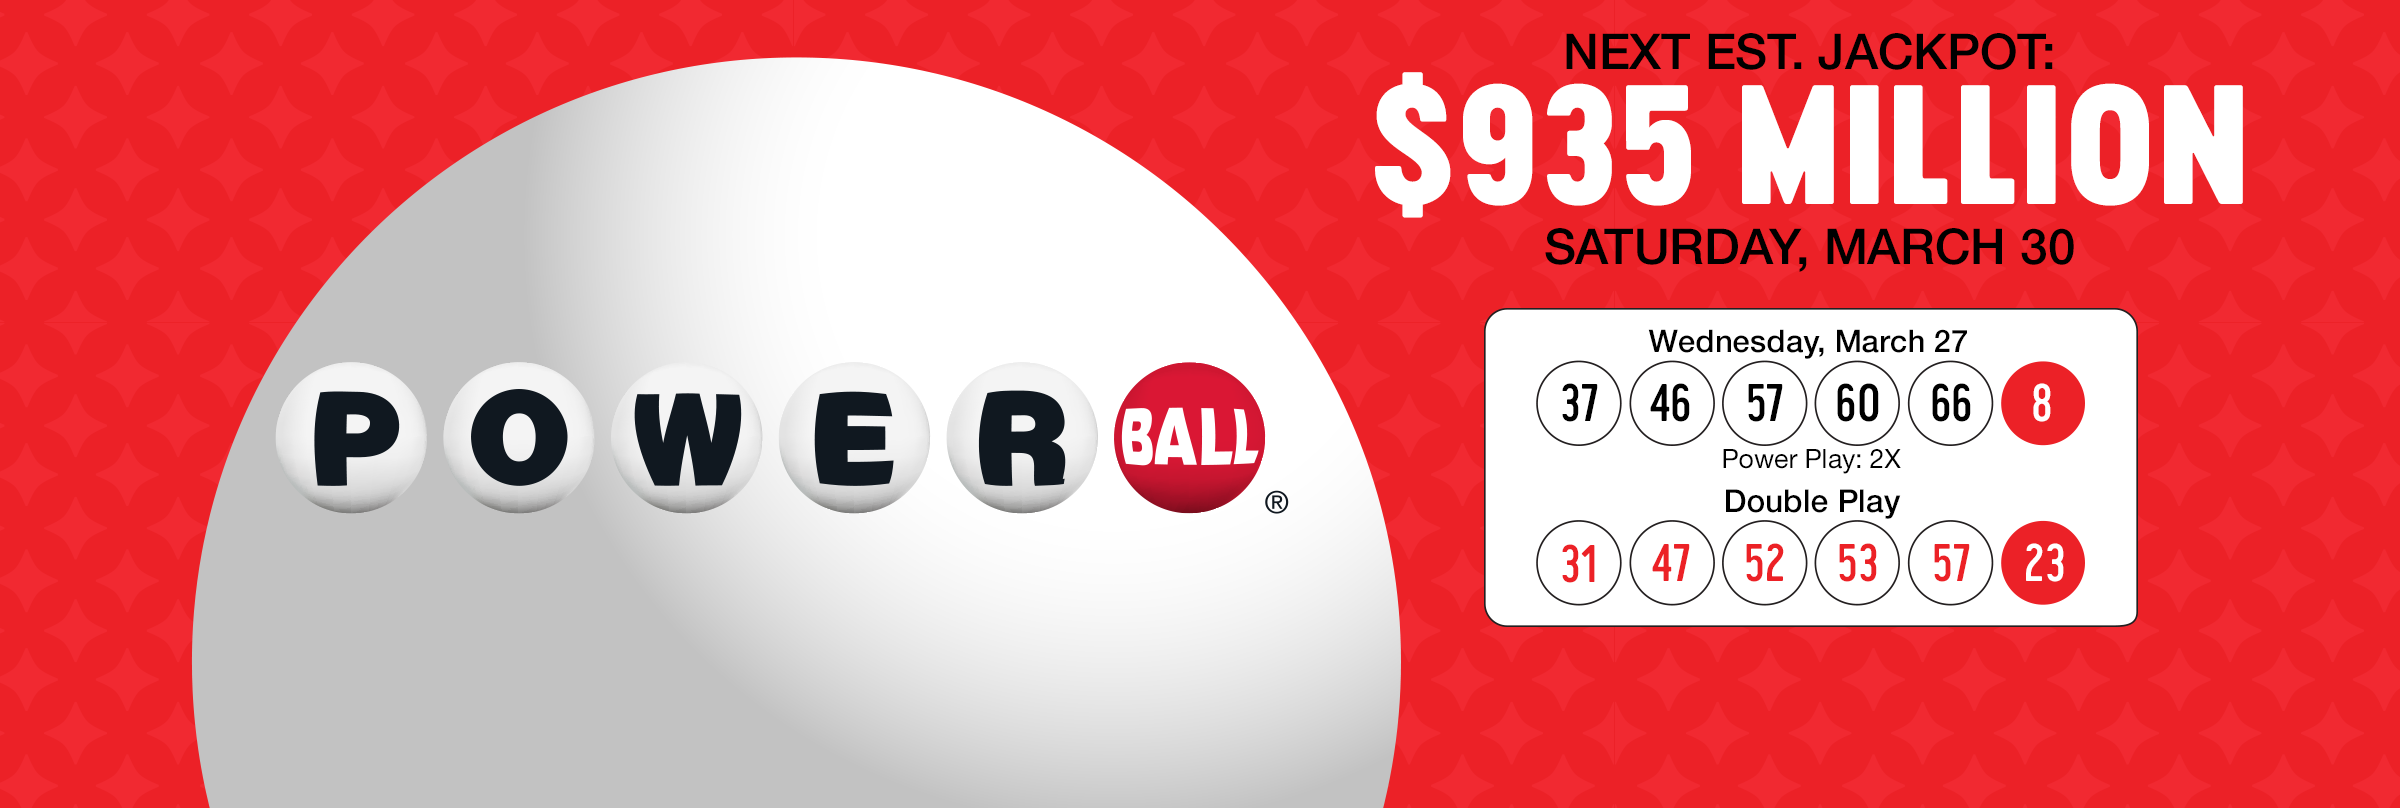 Powerball Jackpot $935M March 30